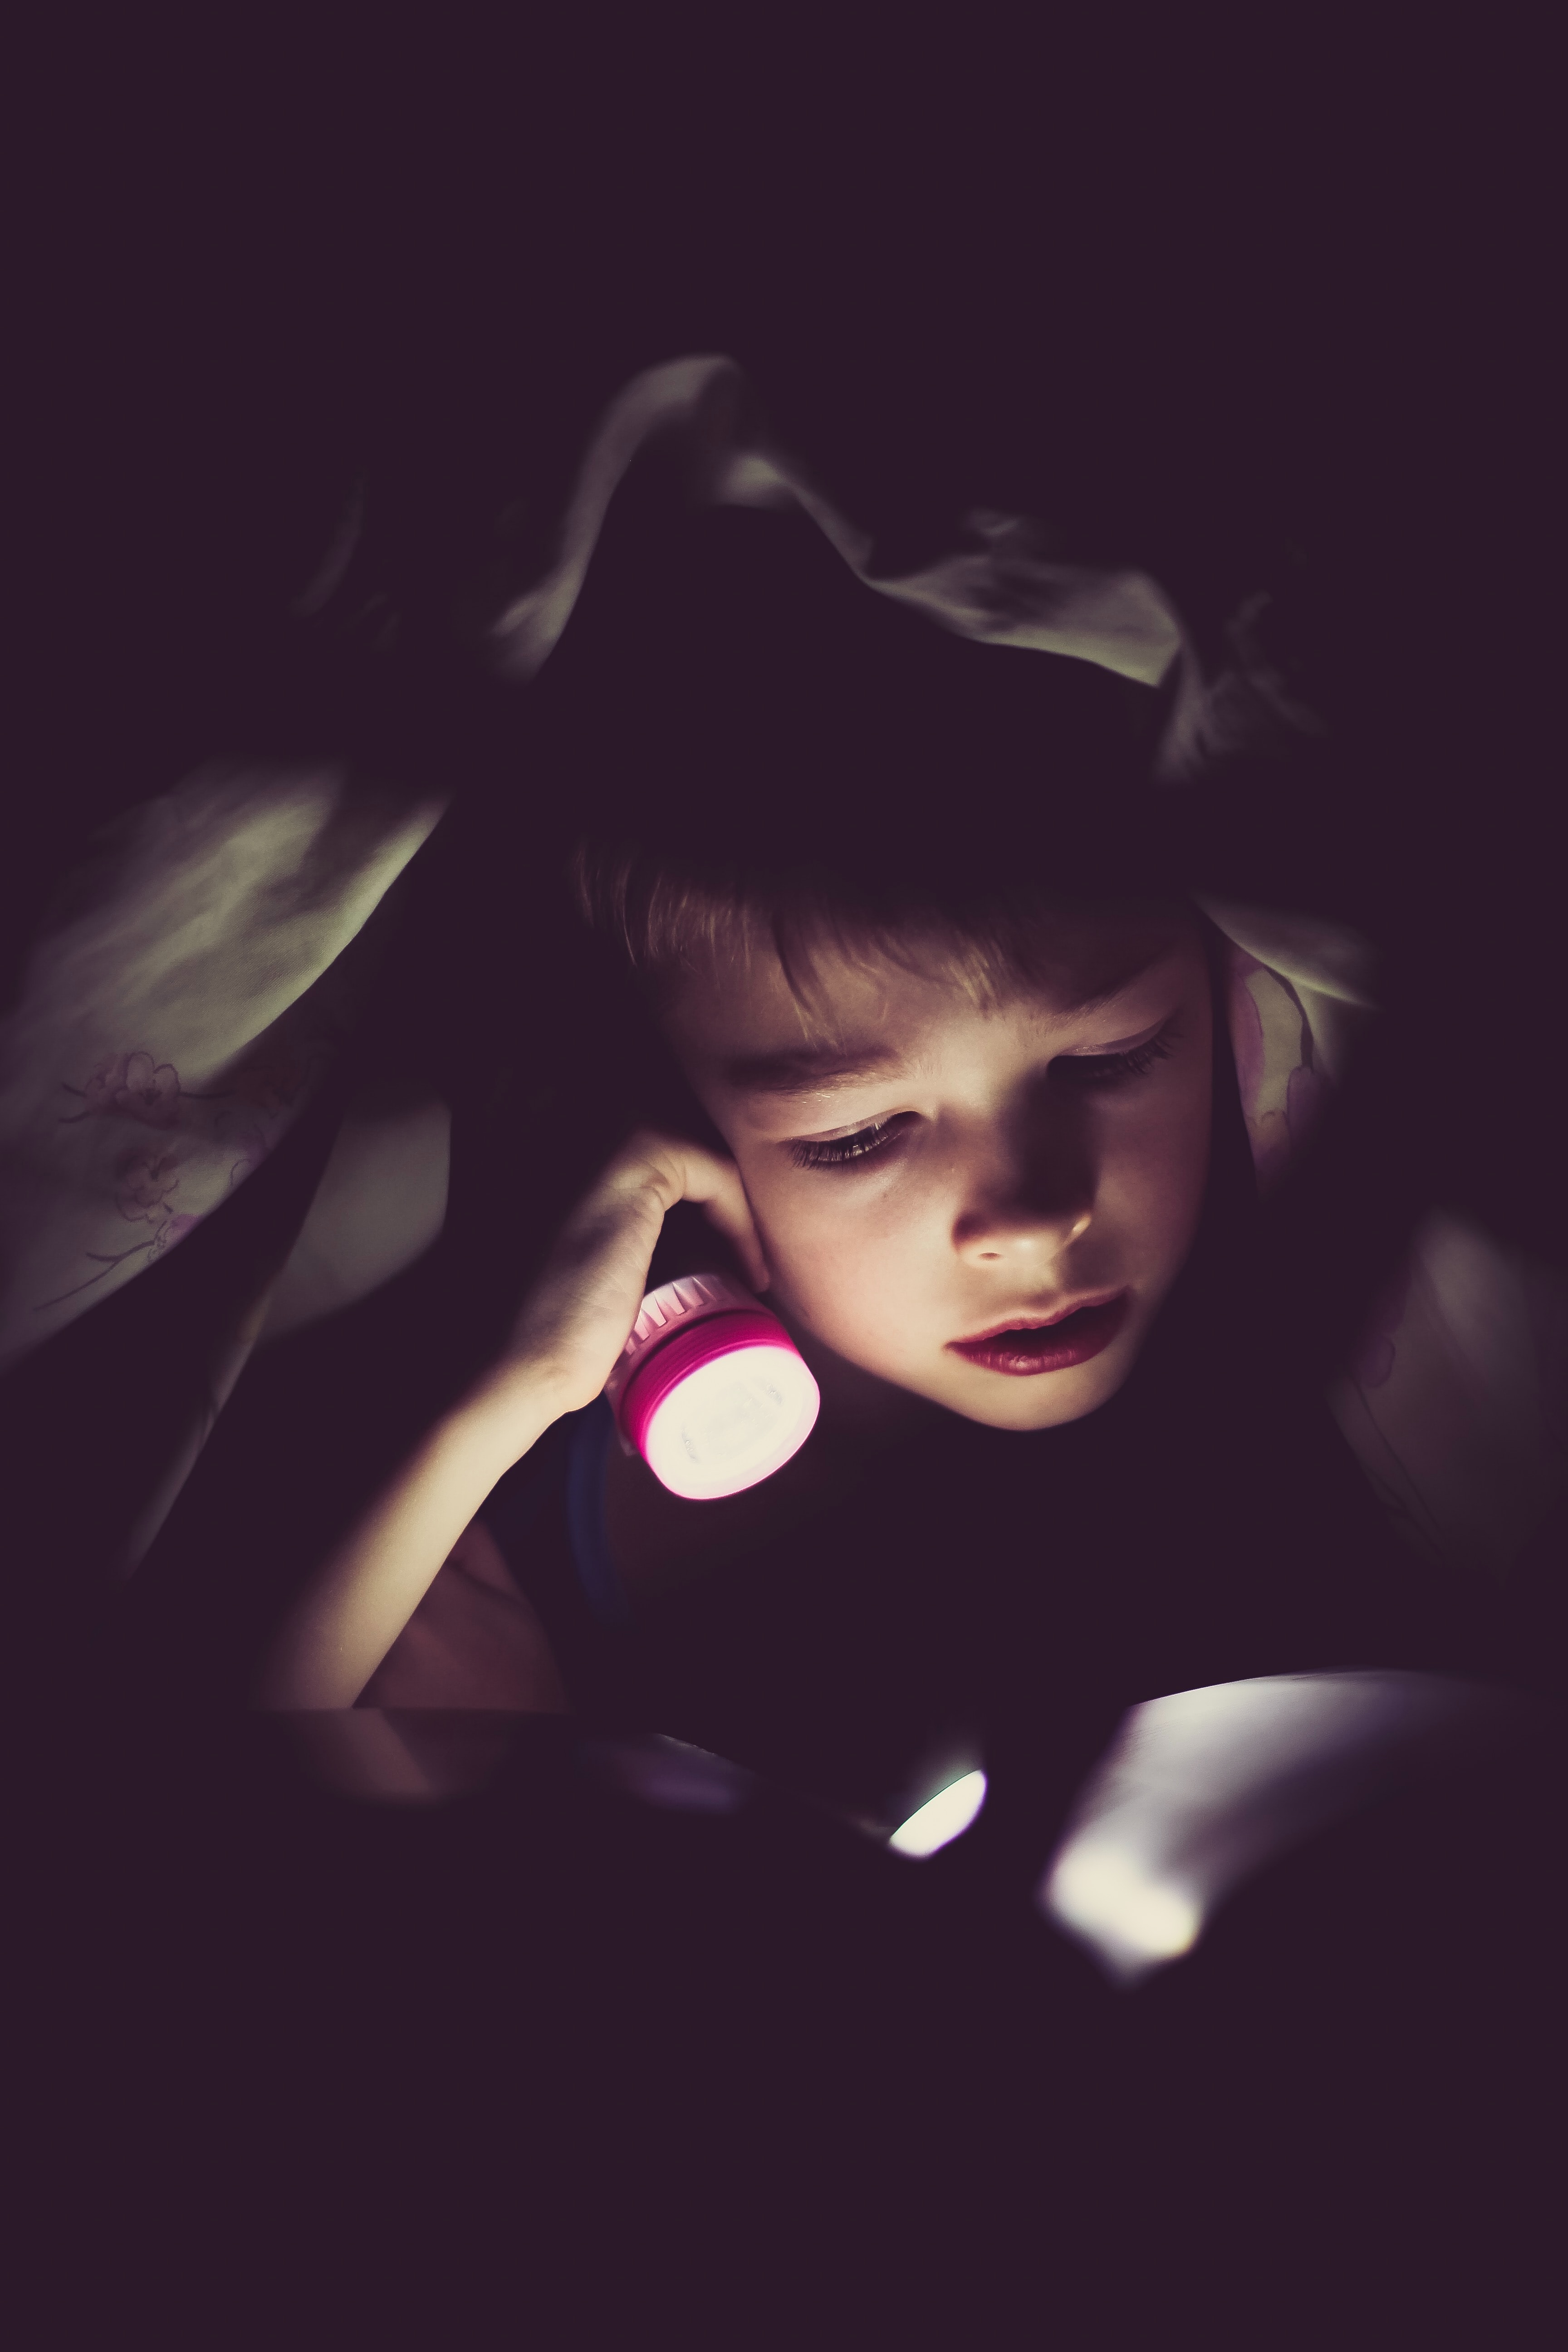 child reading by flashlight in bed by Klim Sergeev